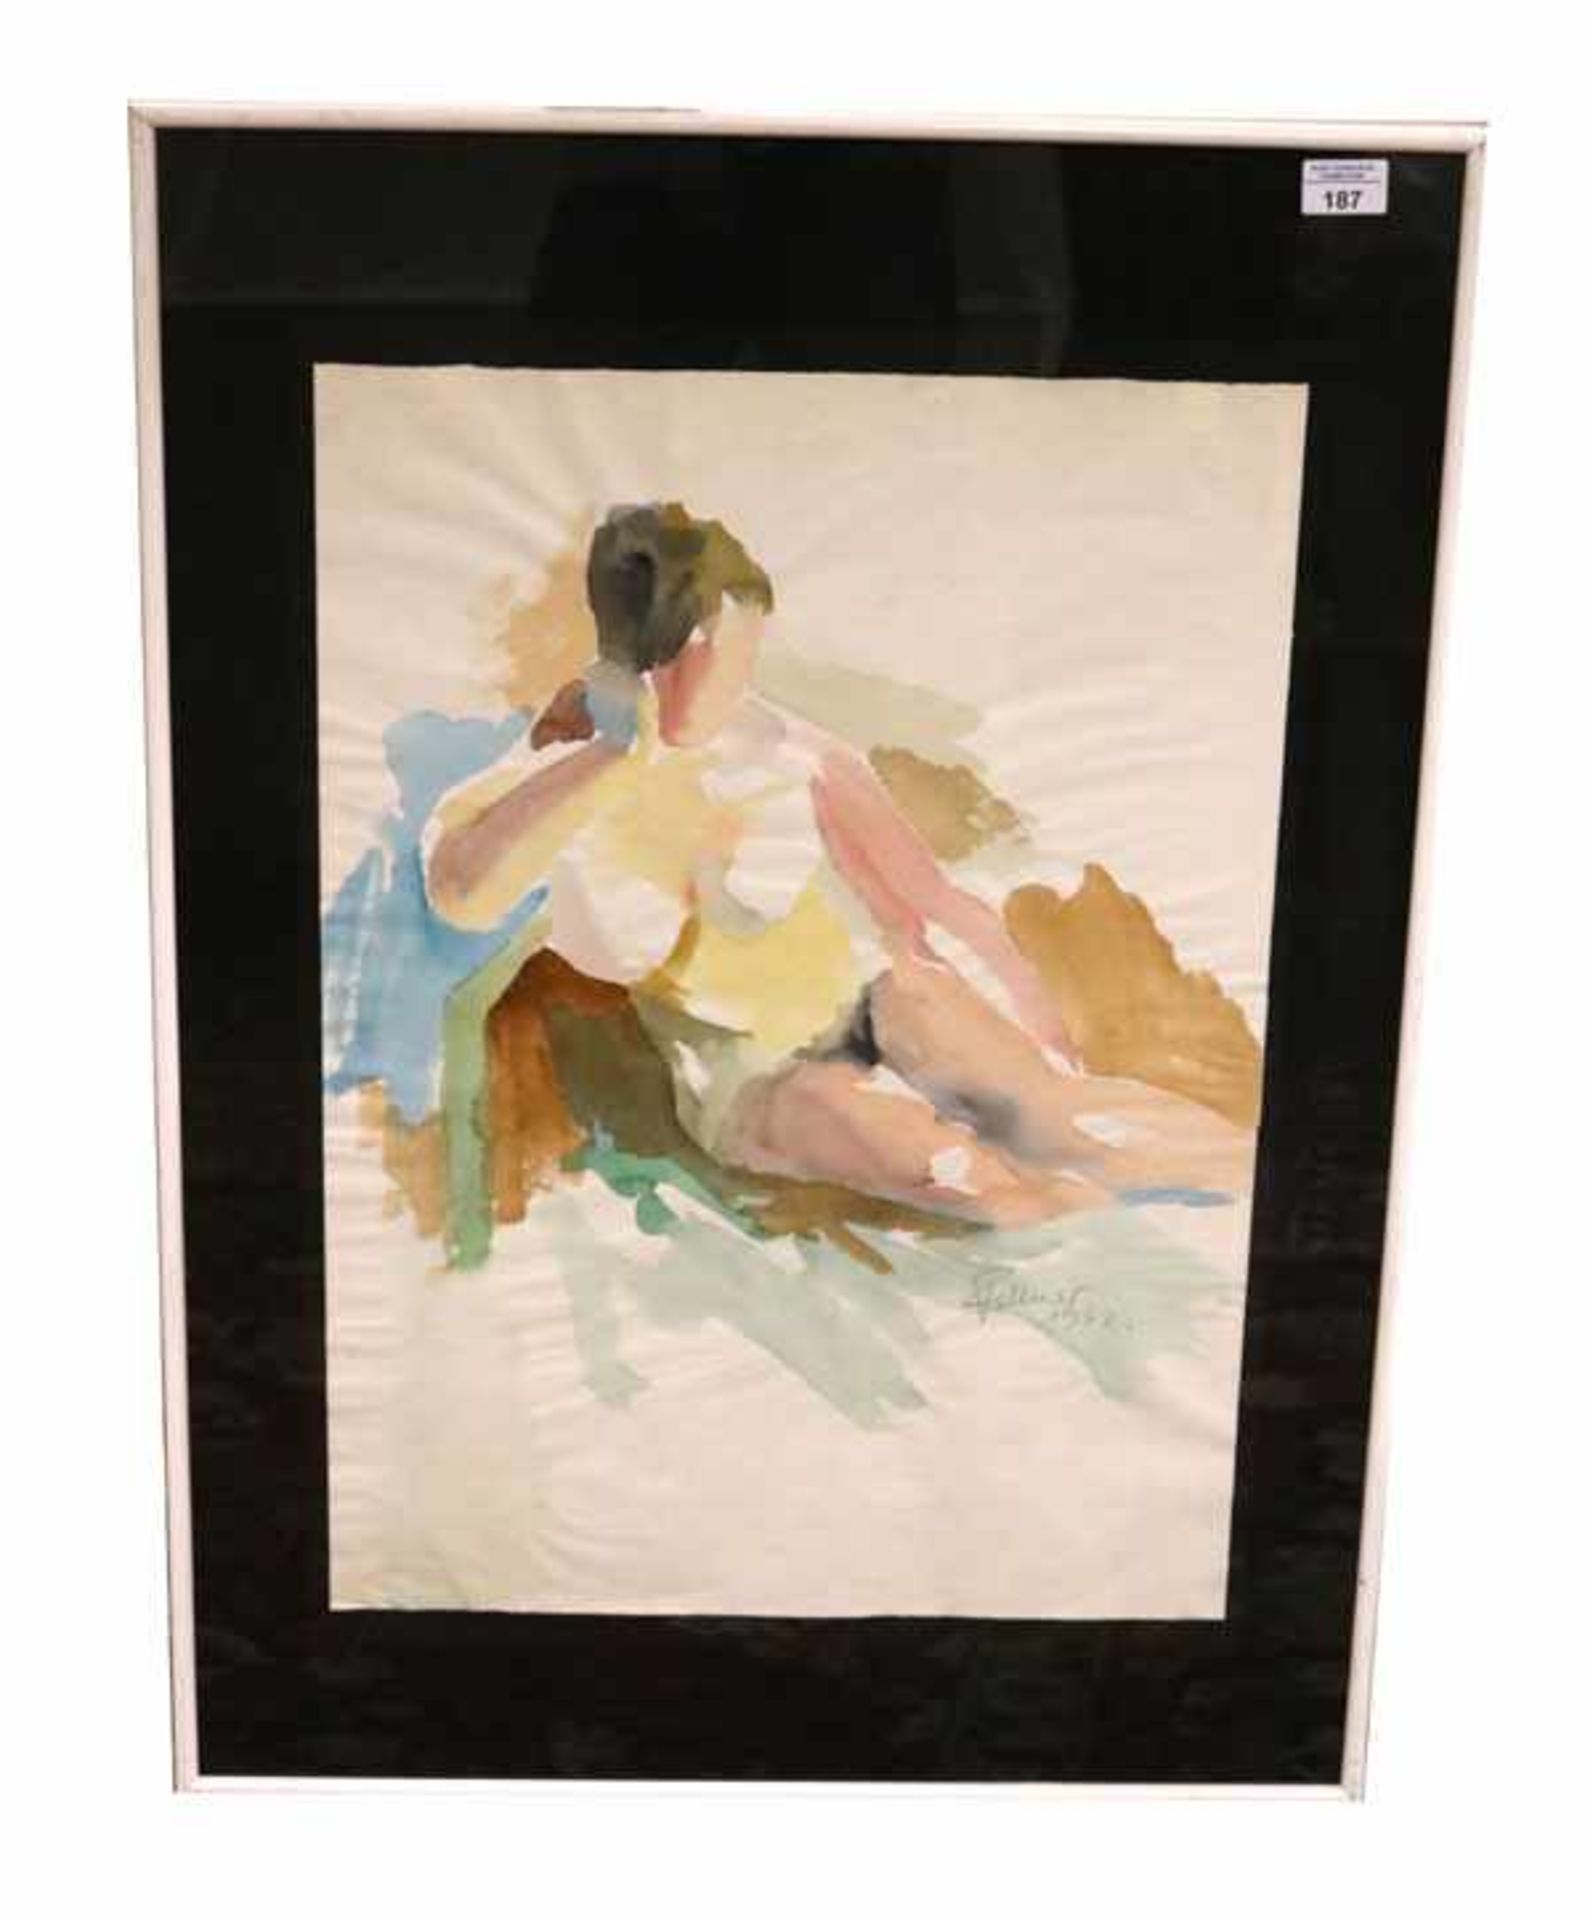 Aquarell 'Damenbildnis', signiert Fellner, Jean-Pierre, datiert 1962, unter Glas gerahmt, Rahmen